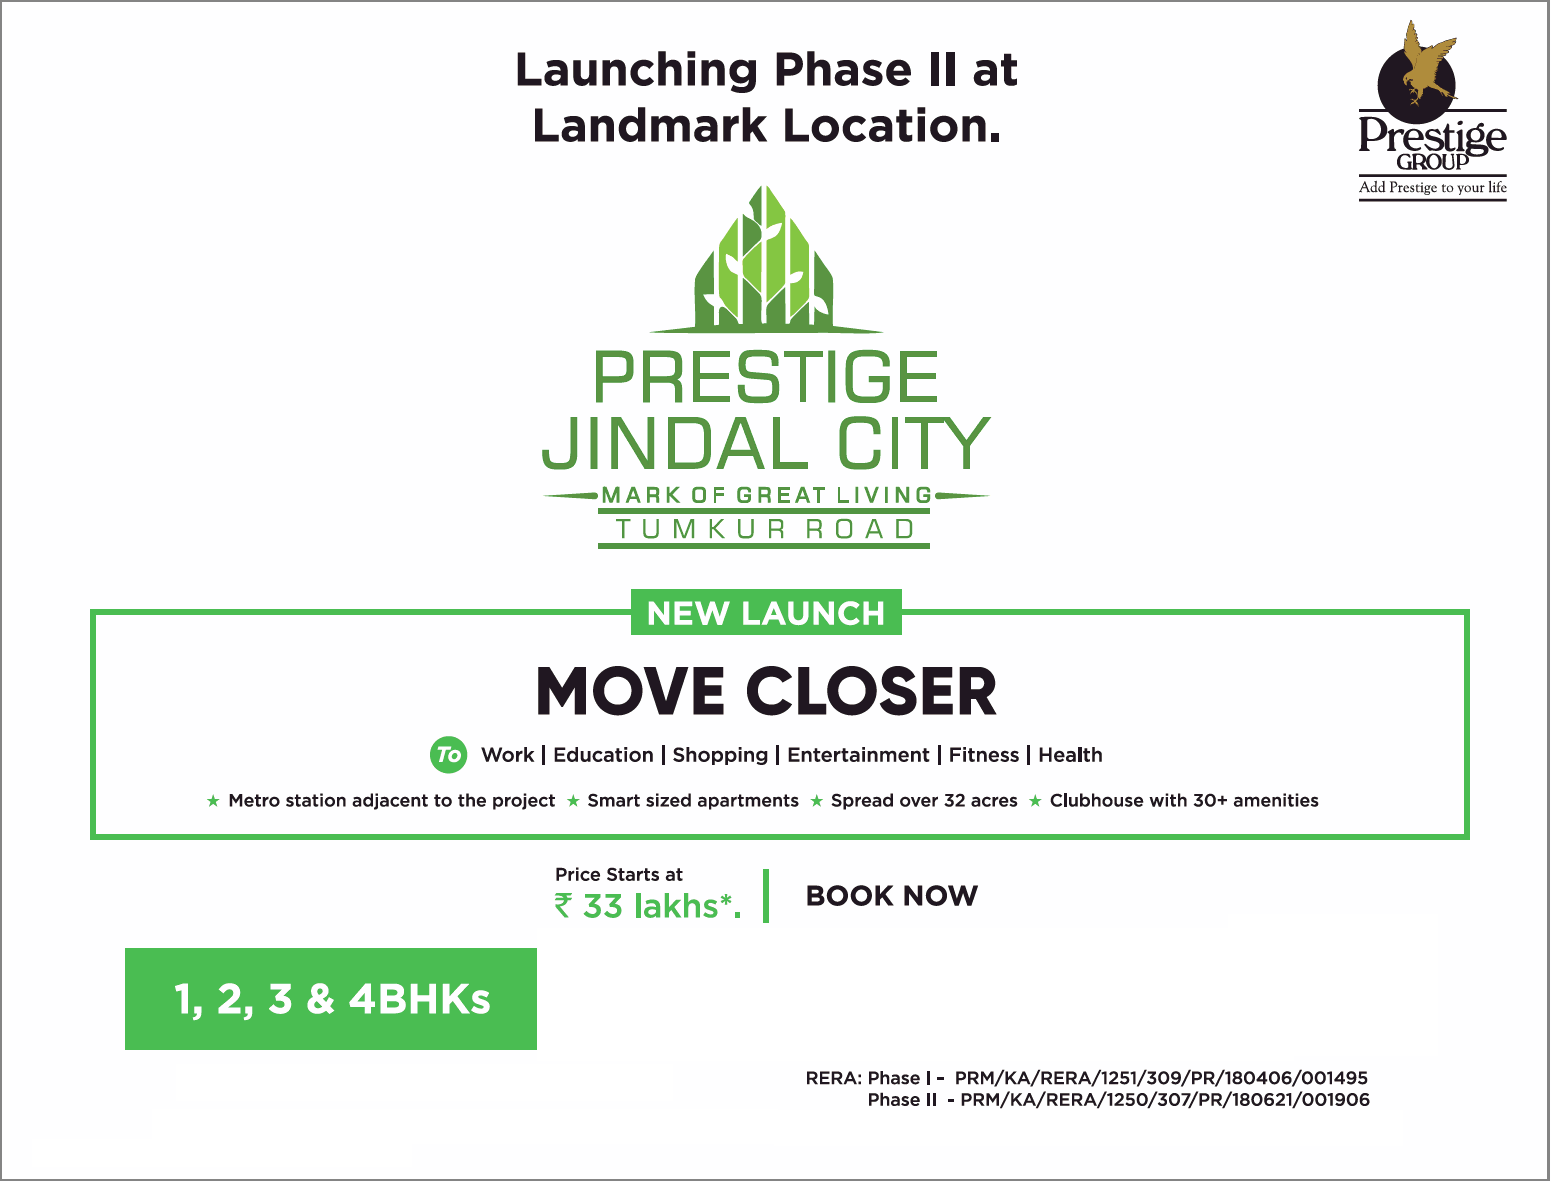 Prestige Jindal City launching 1, 2, 3 & 4 bhk at Rs. 33 lakhs in Bangalore